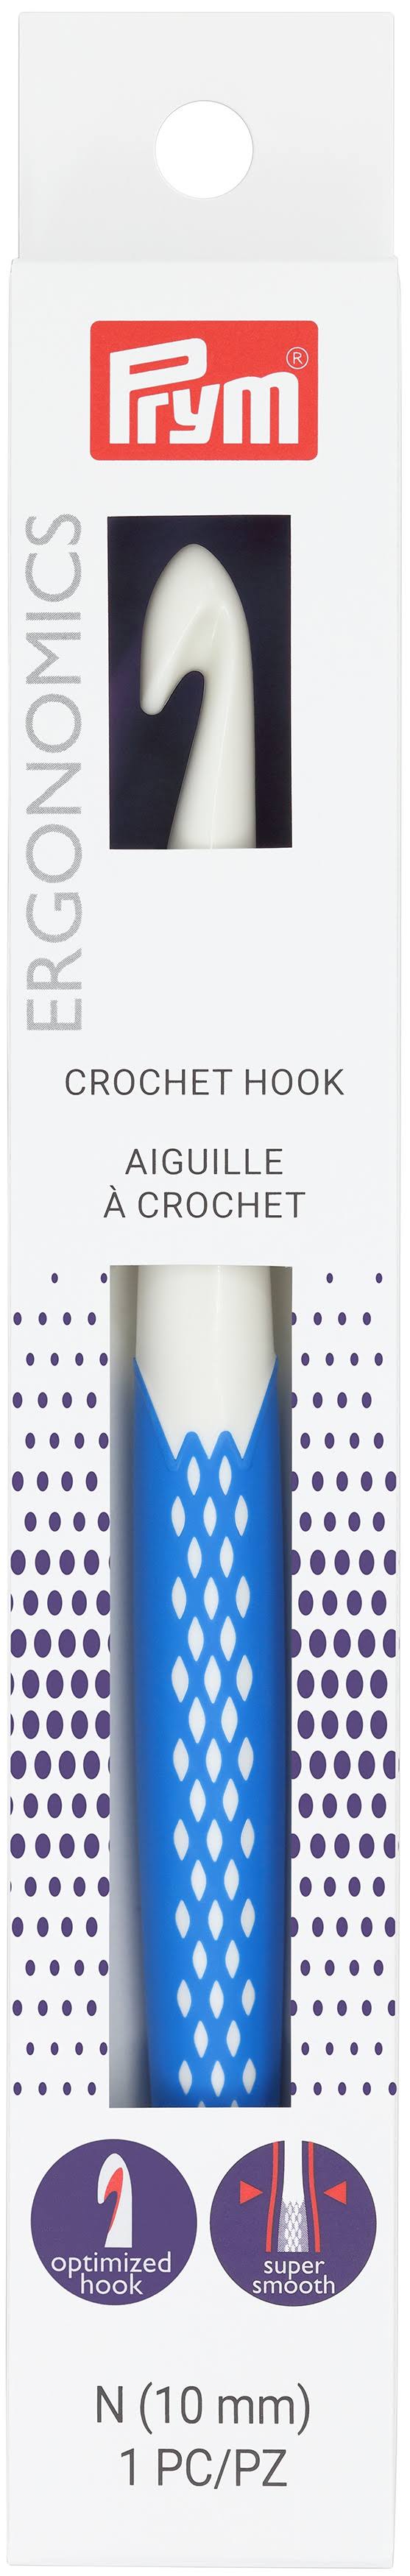 Prym Crochet Hook Size N15/10mm